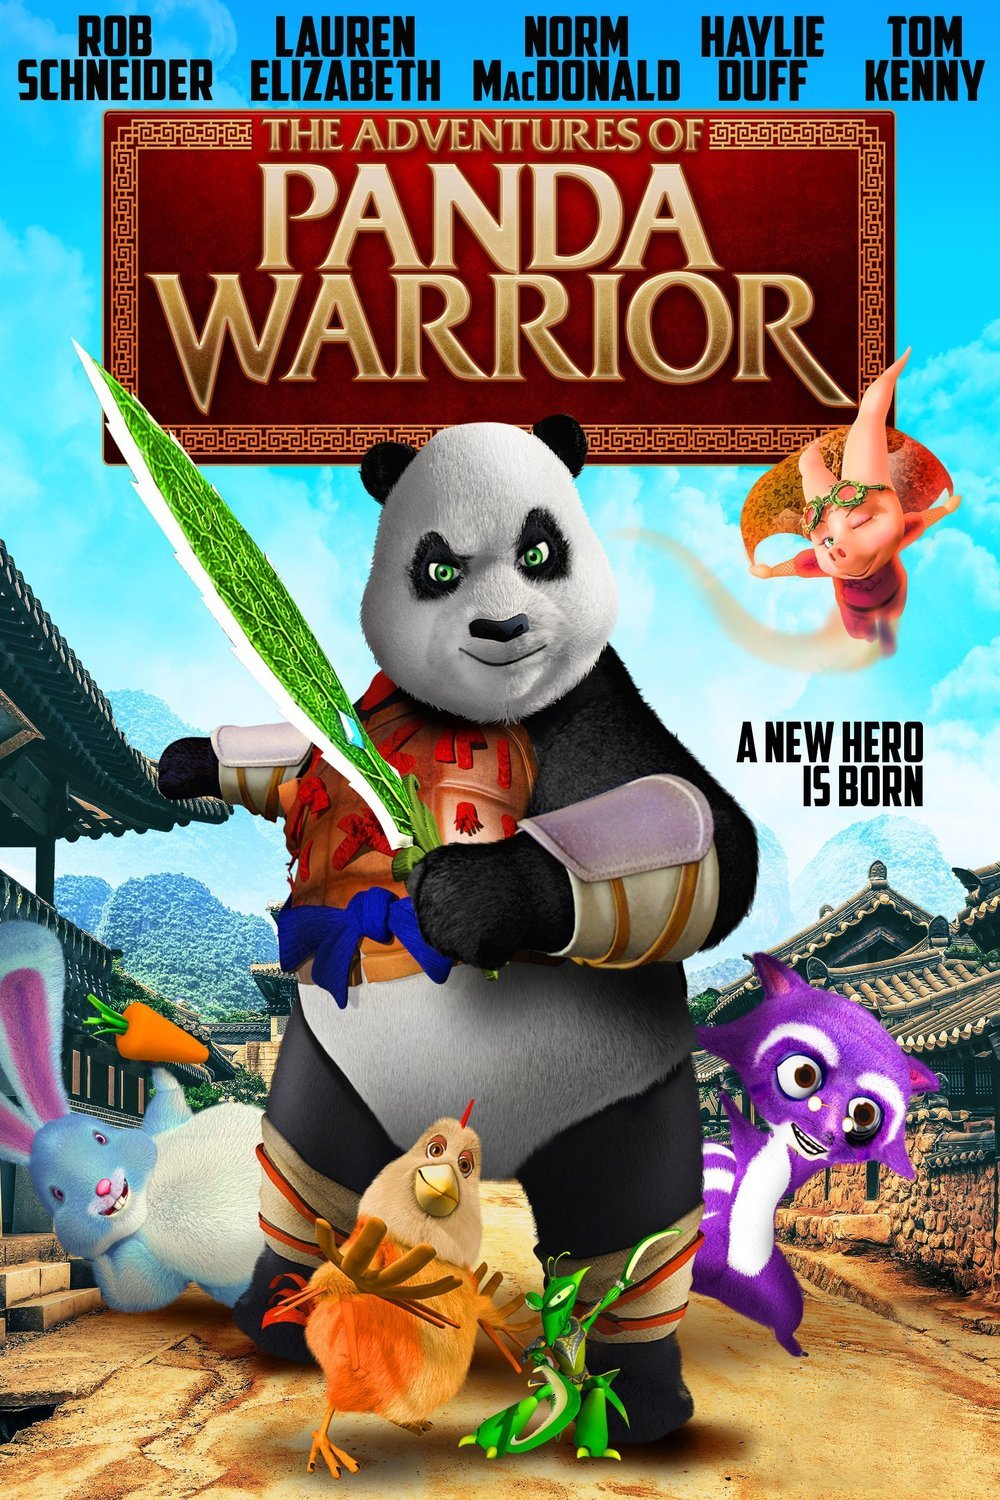 Mandarin poster of the movie The Adventures of Panda Warrior